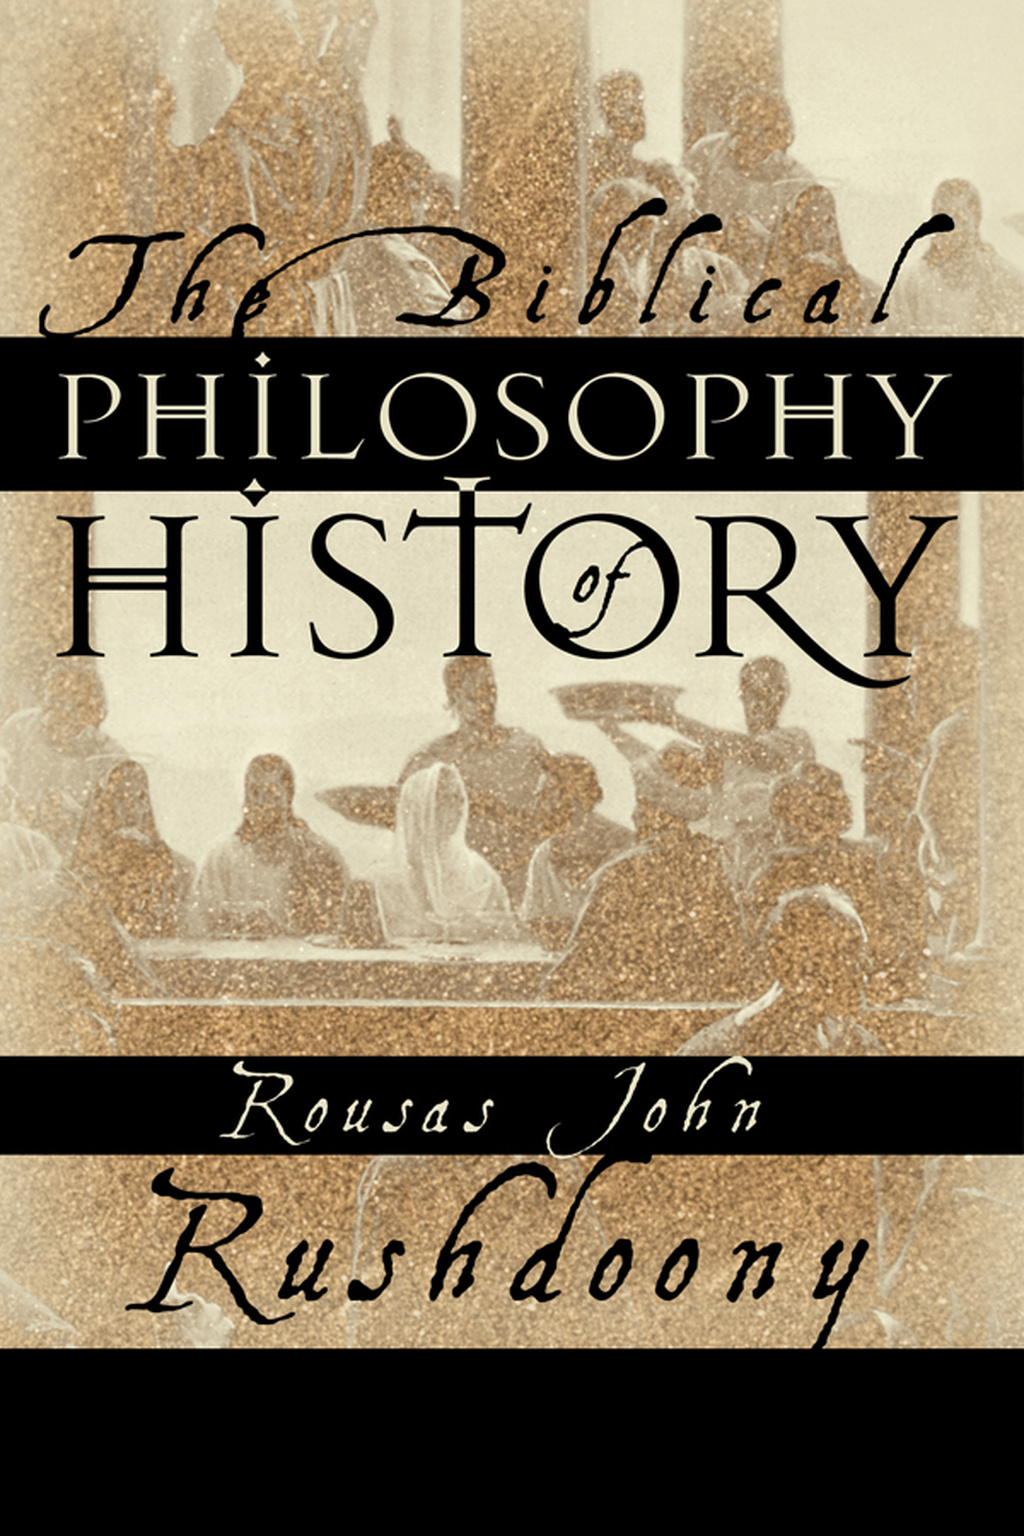 Biblical Philosophy of History600x900 2